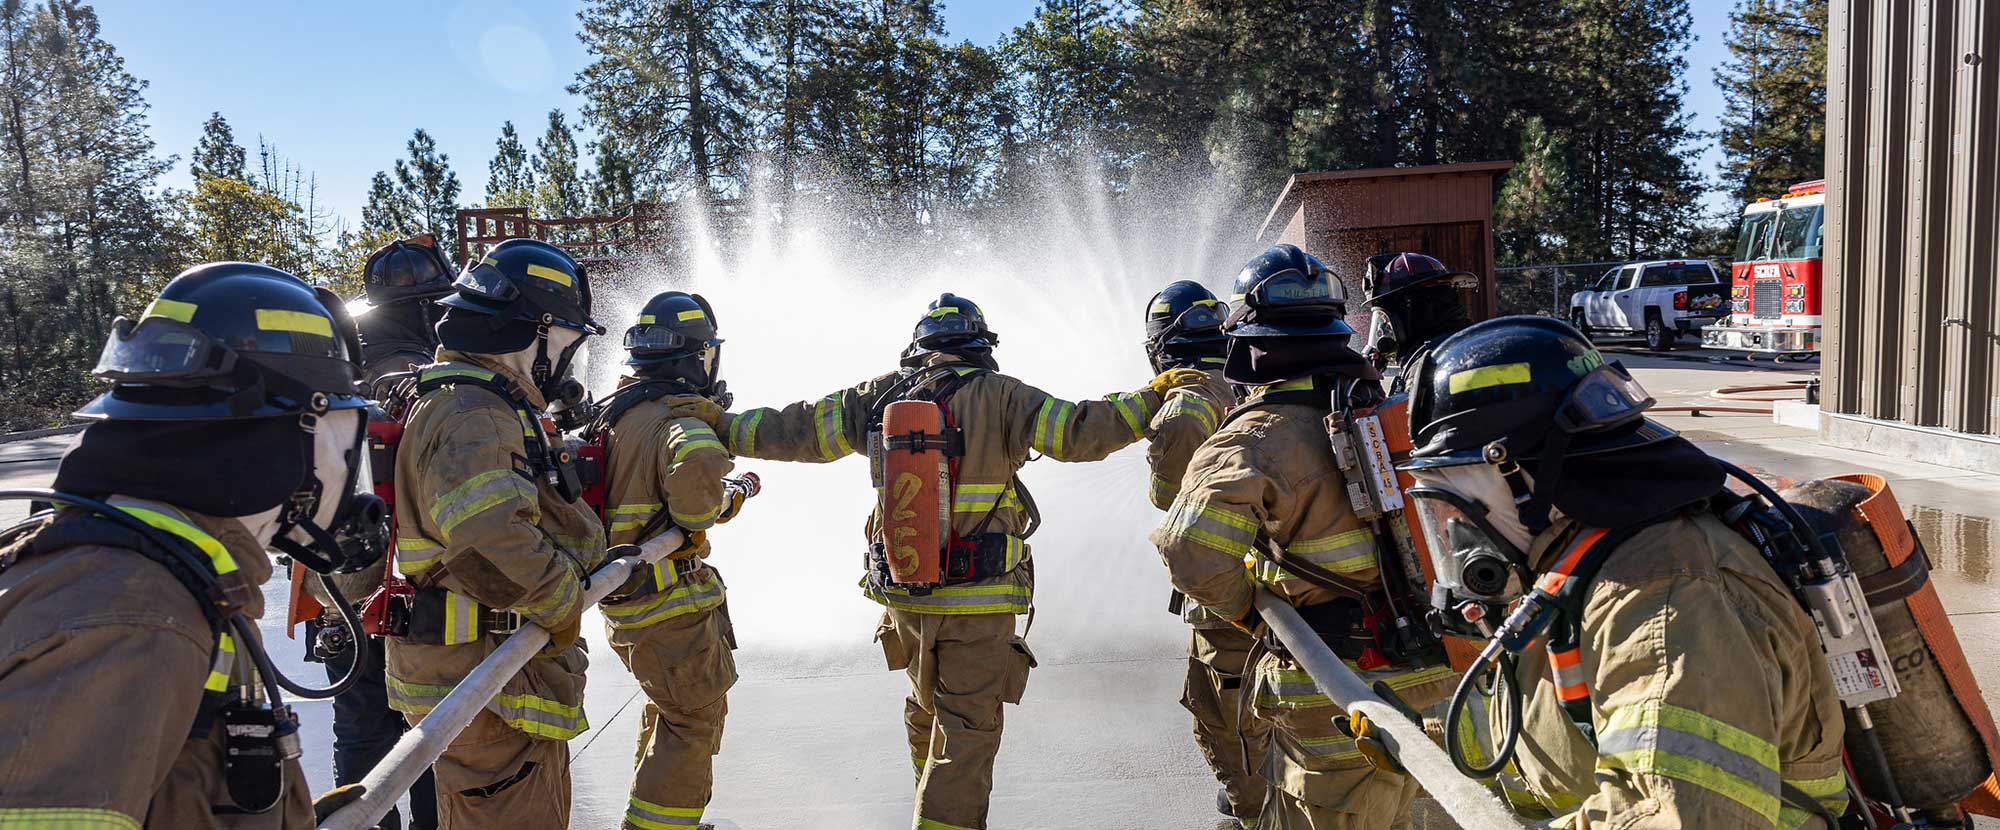 Advanced Procedure Executor adapted to firefighting needs